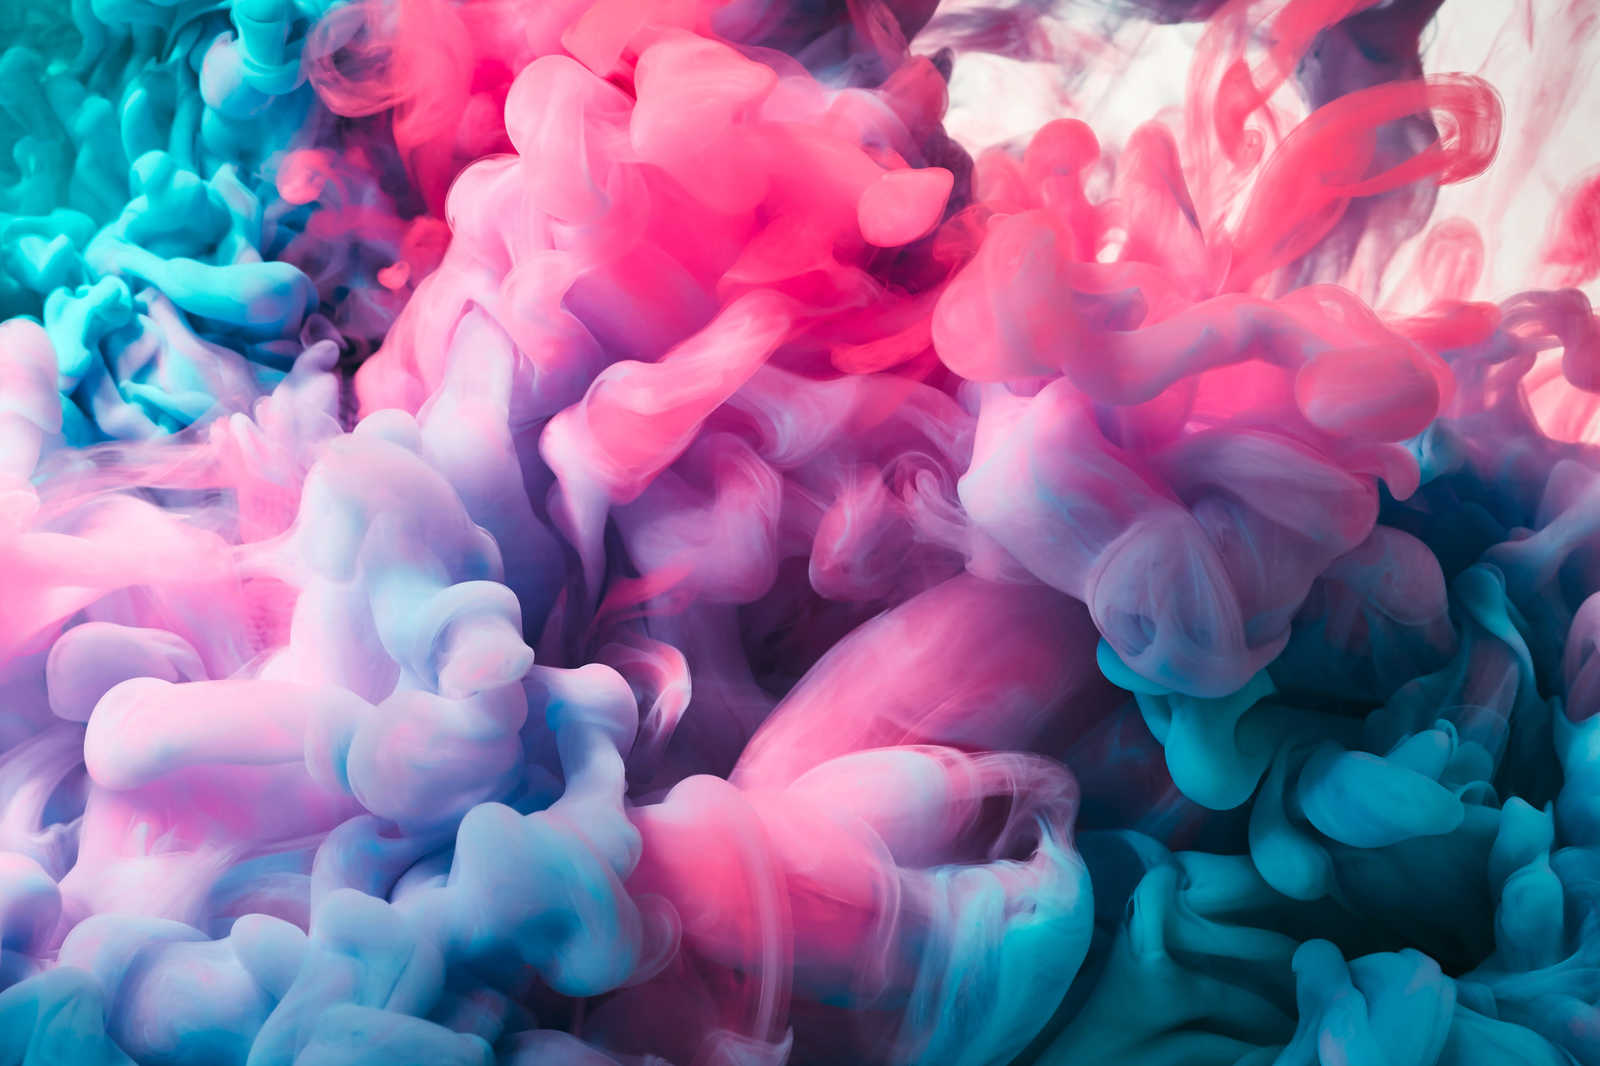             Tela fumé colorata |Rosa, blu, bianca - 0,90 m x 0,60 m
        